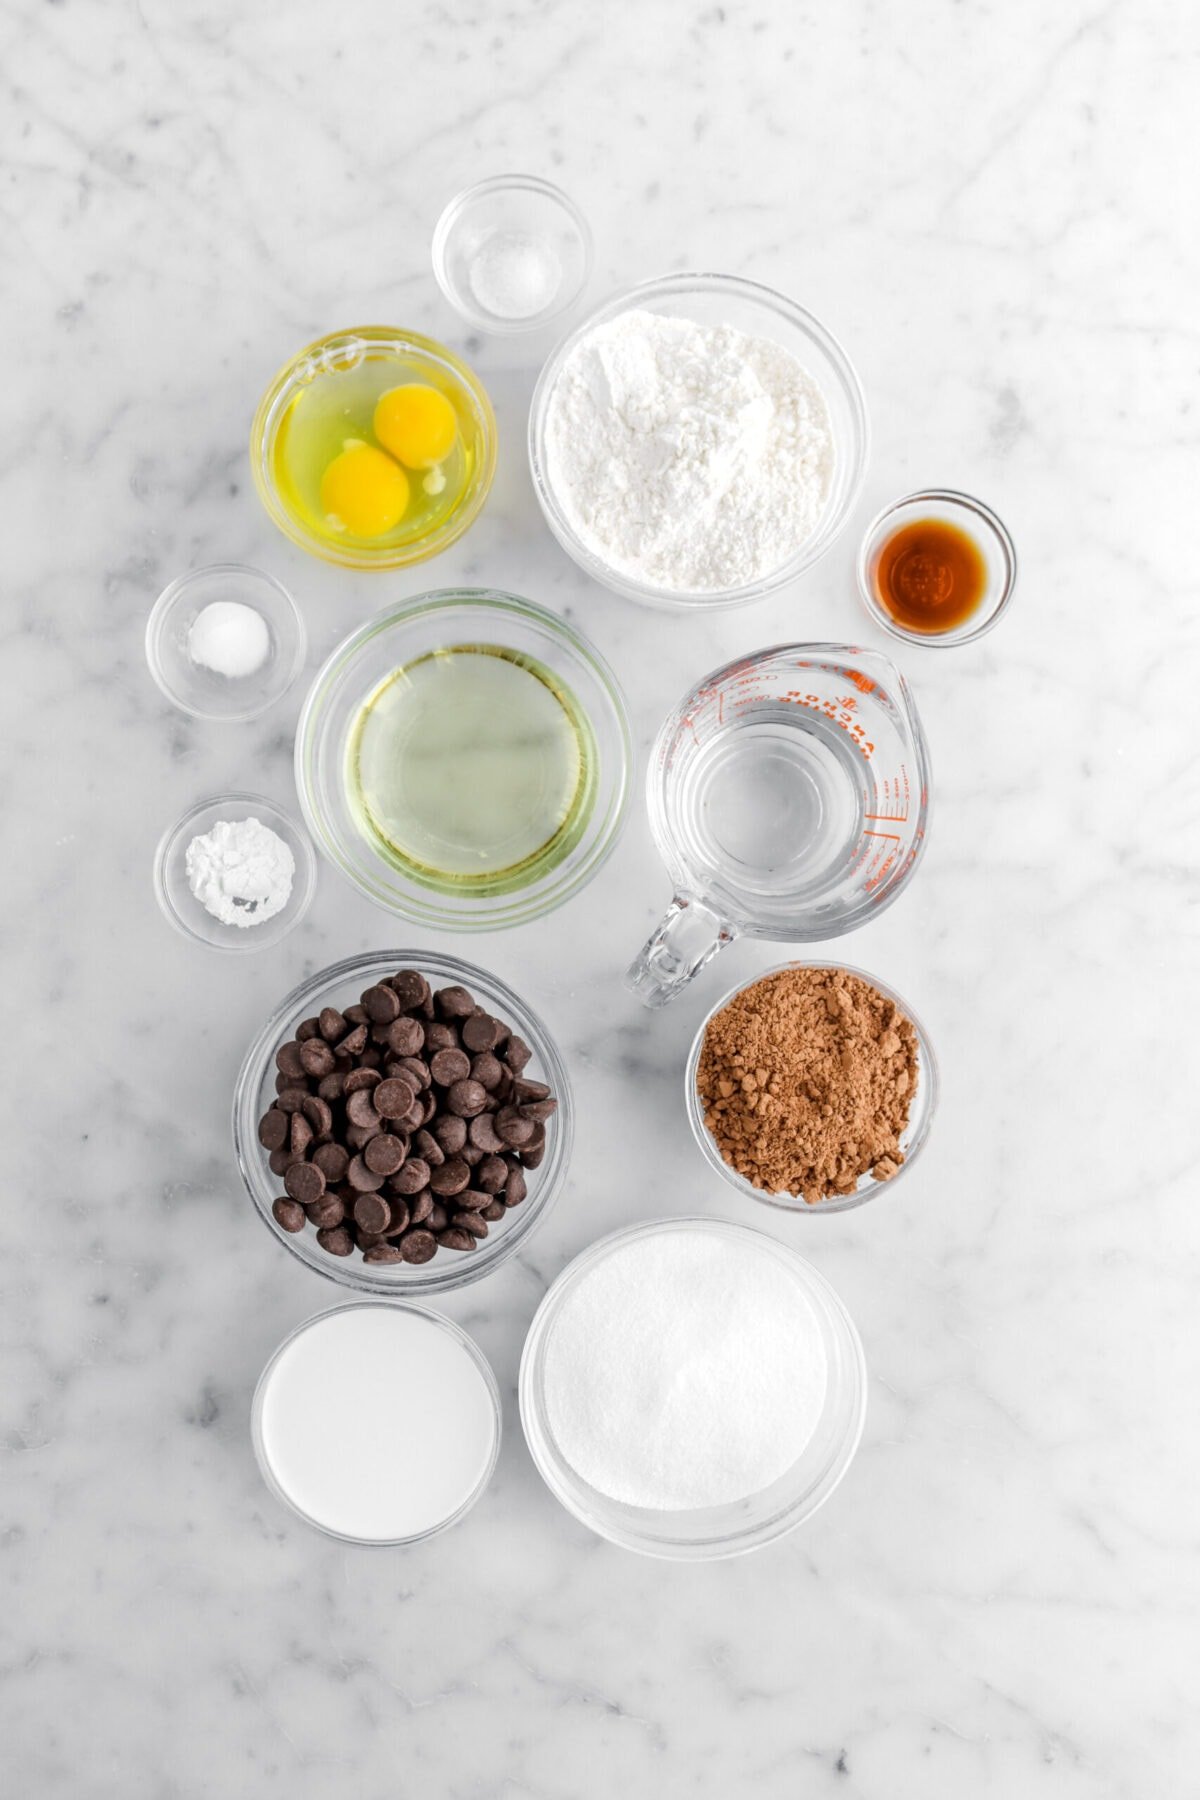 salt, eggs, flour, vanilla, baking soda, baking powder, oil, water, cocoa powder, chocolate chips, milk, and sugar on marble surface.